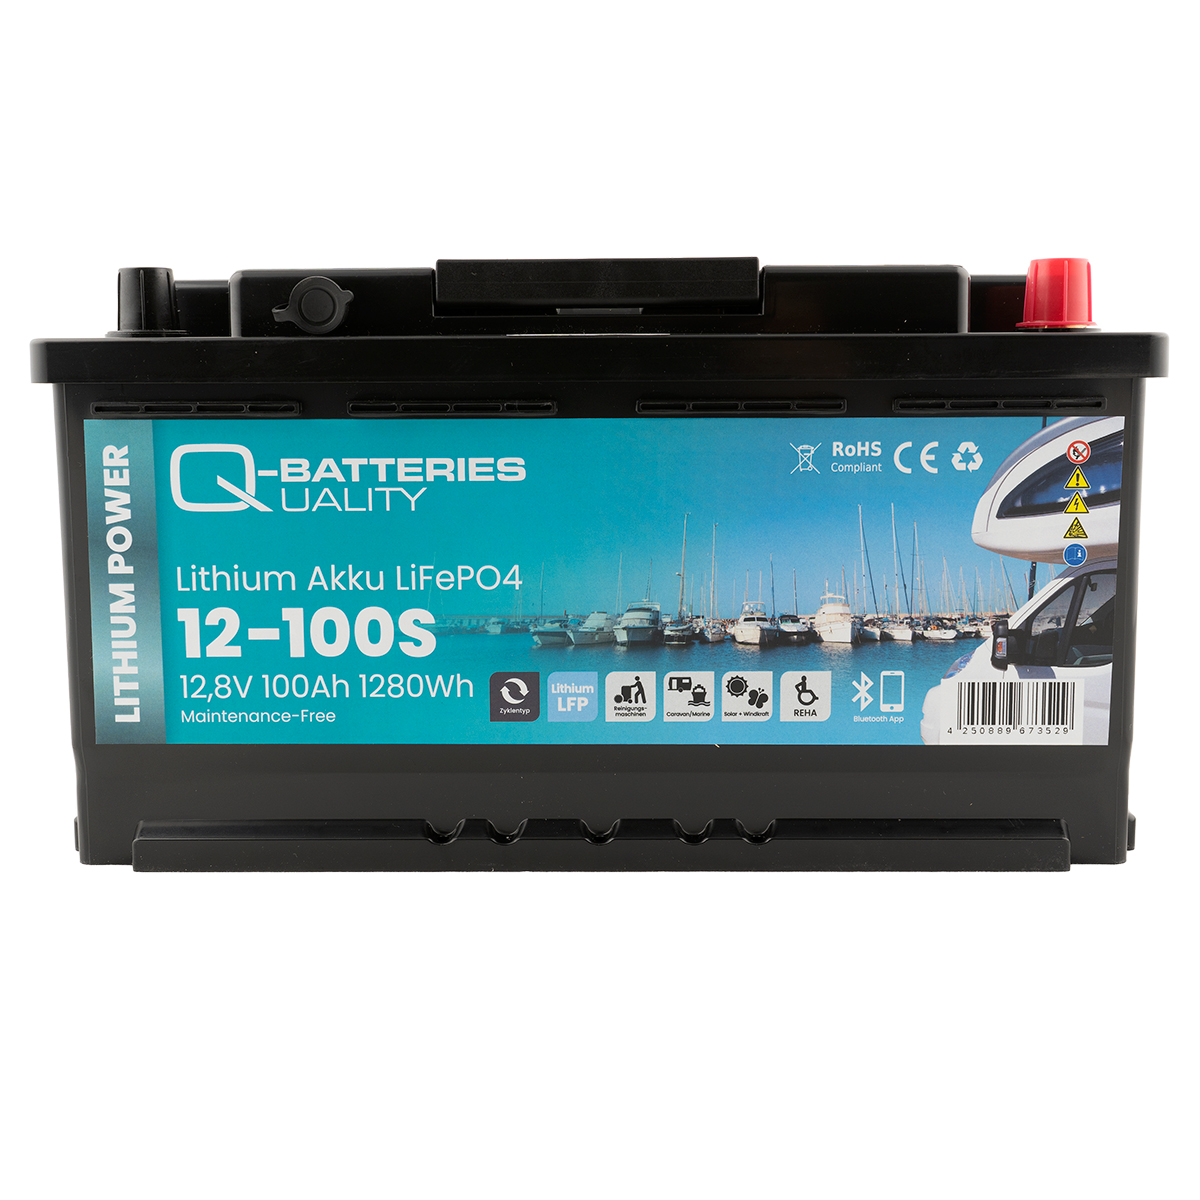 Q-Batteries Lithium Akku 12-100S 12,8V 100Ah 1280Wh LiFePO4 Batterie mit Bluetooth